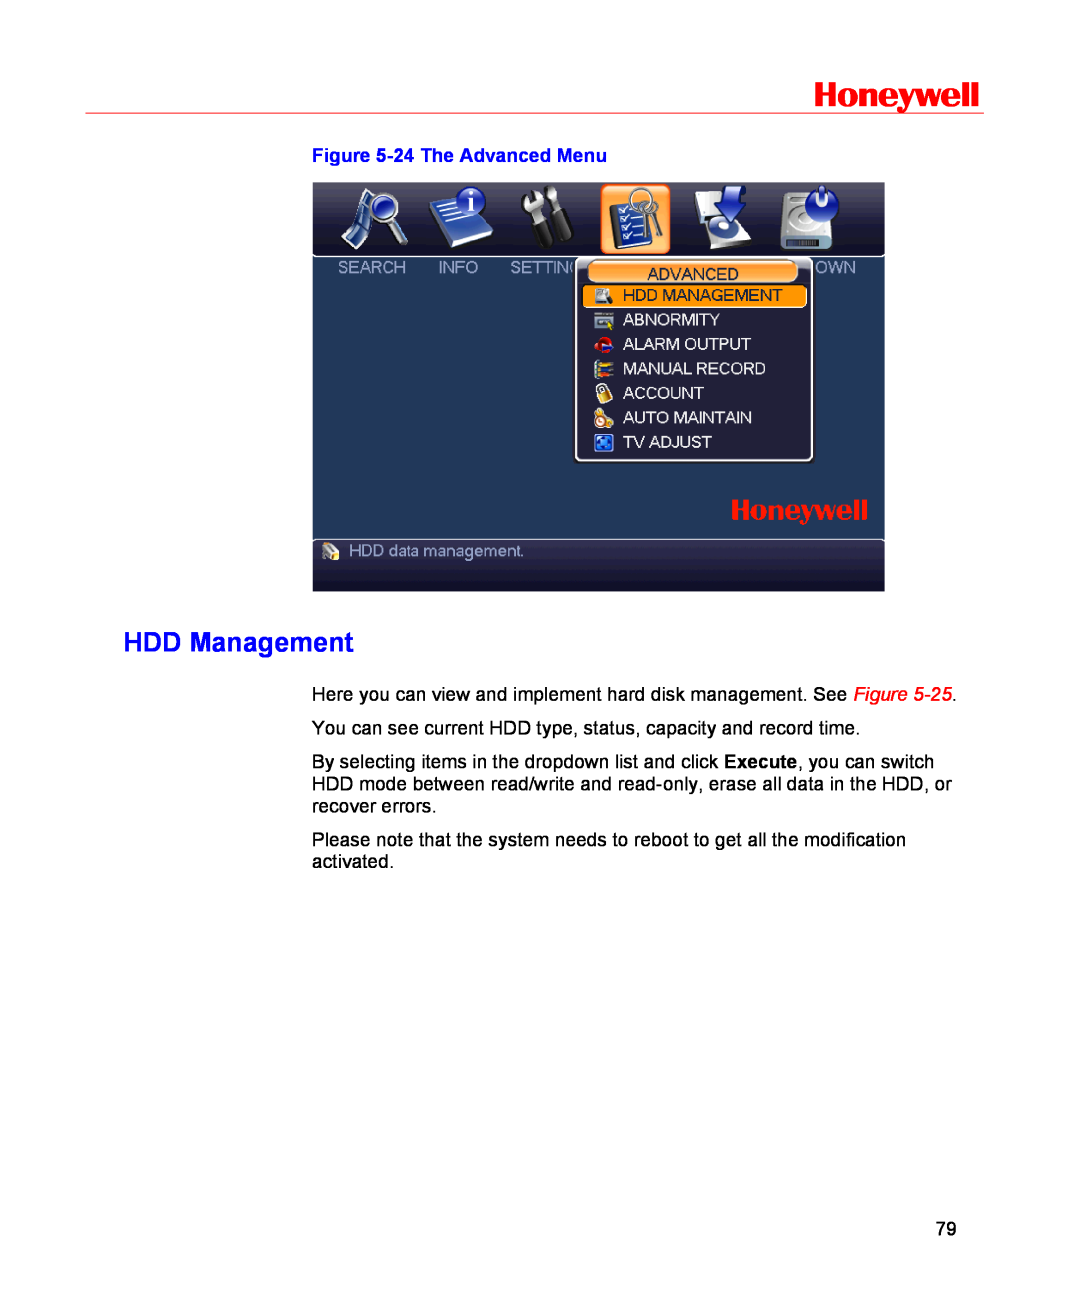 Honeywell HSVR-16, HSVR-04 user manual HDD Management, Honeywell, 24 The Advanced Menu 